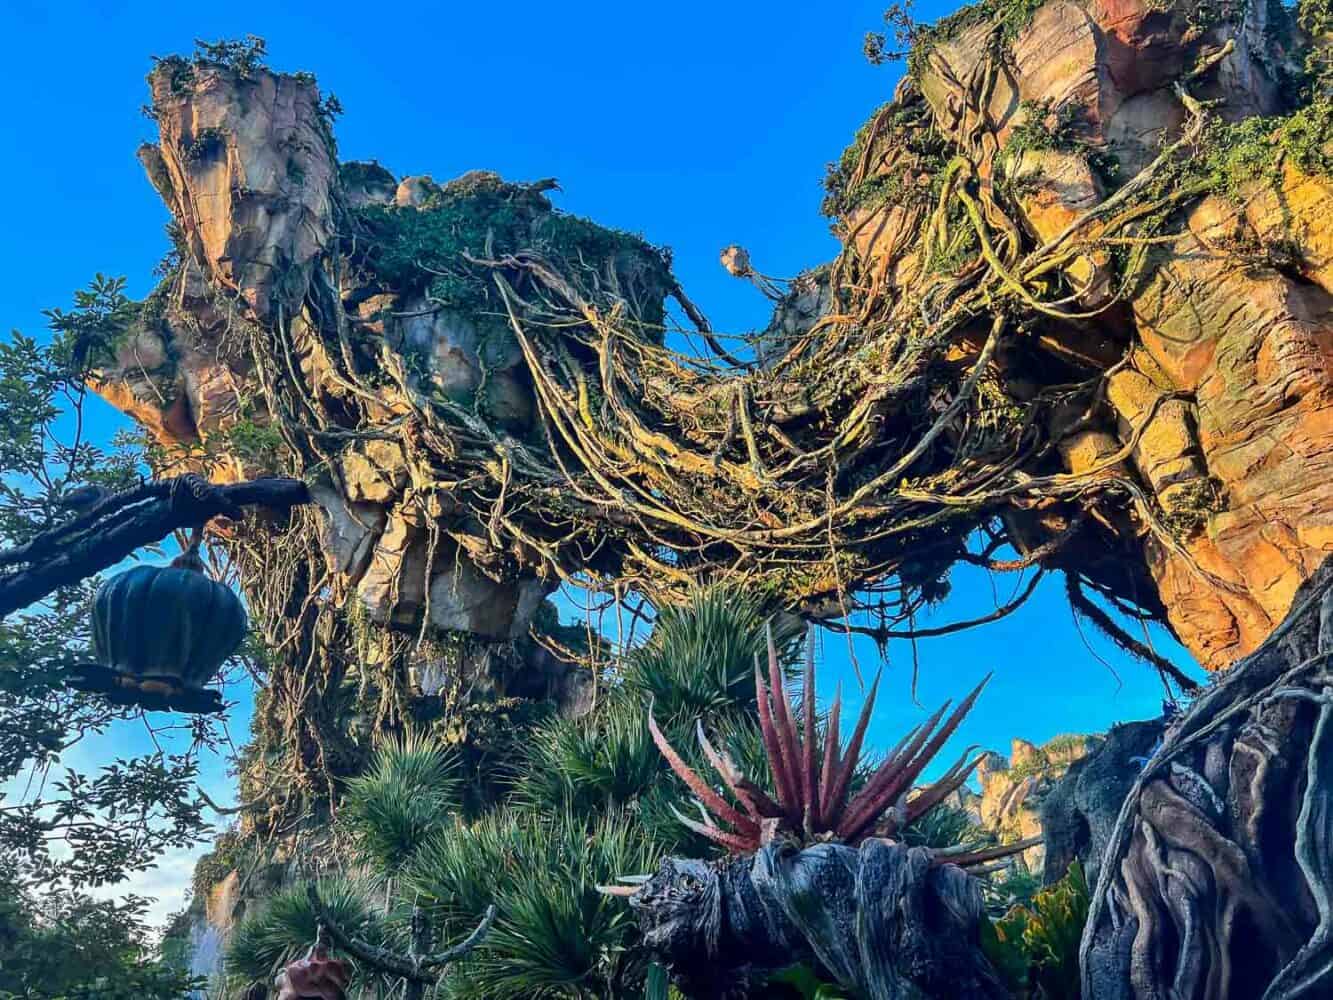 Flora and fauna of Pandora based on the film Avatar, Animal Kingdom, Disney World, Orlando